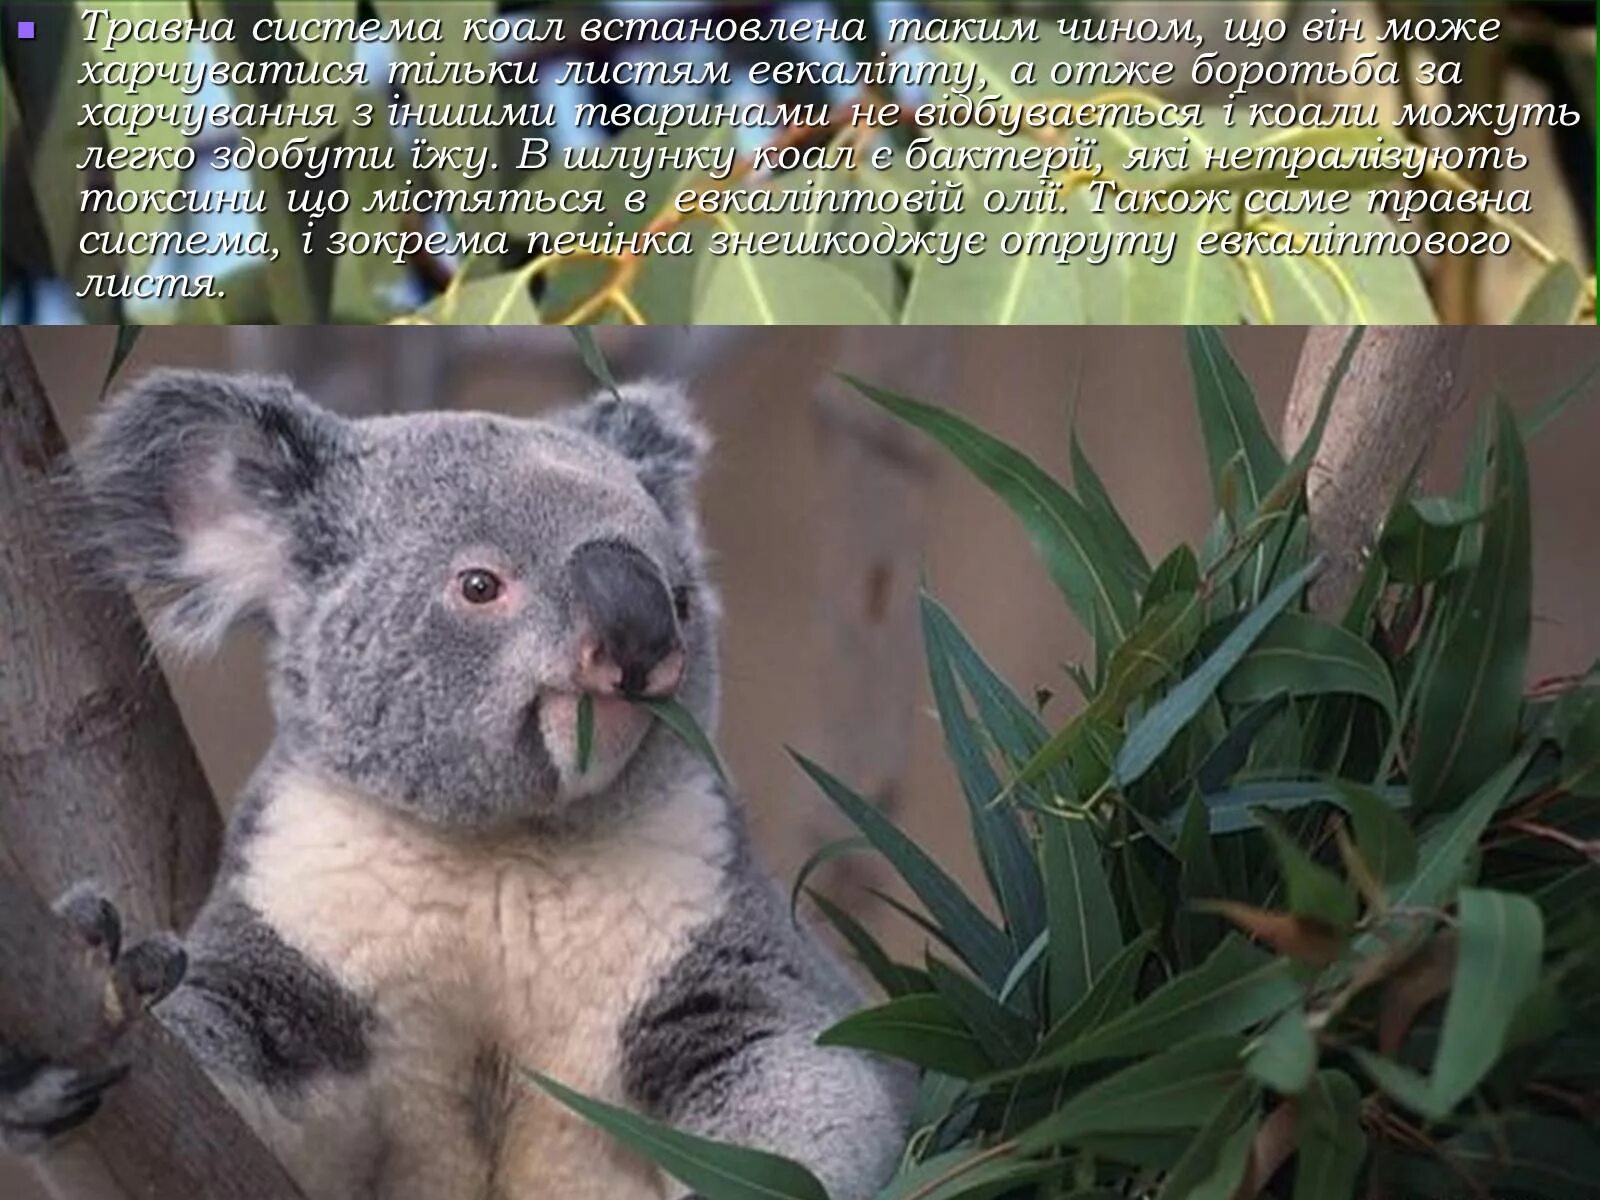 Факты о коалах. Коала. Коала фото. Коала интересные факты. Австралия коала интересные факты.